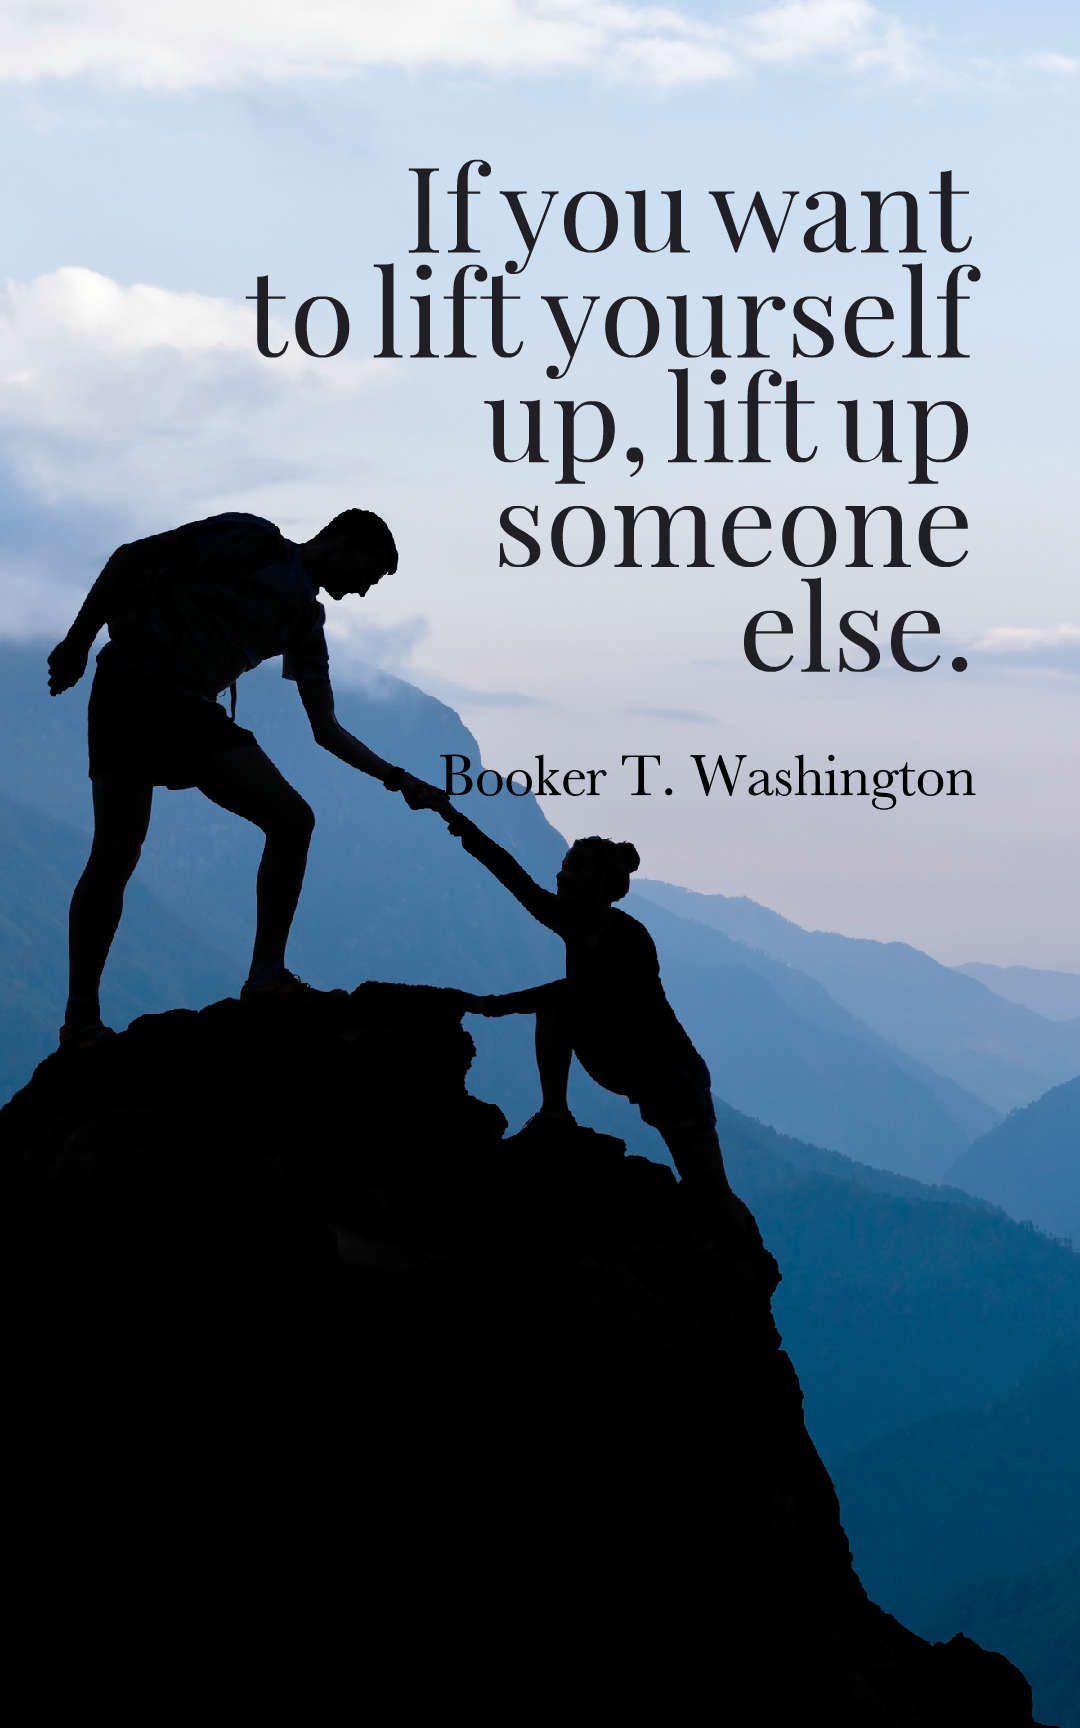 18 Inspirational Booker T. Washington Quotes